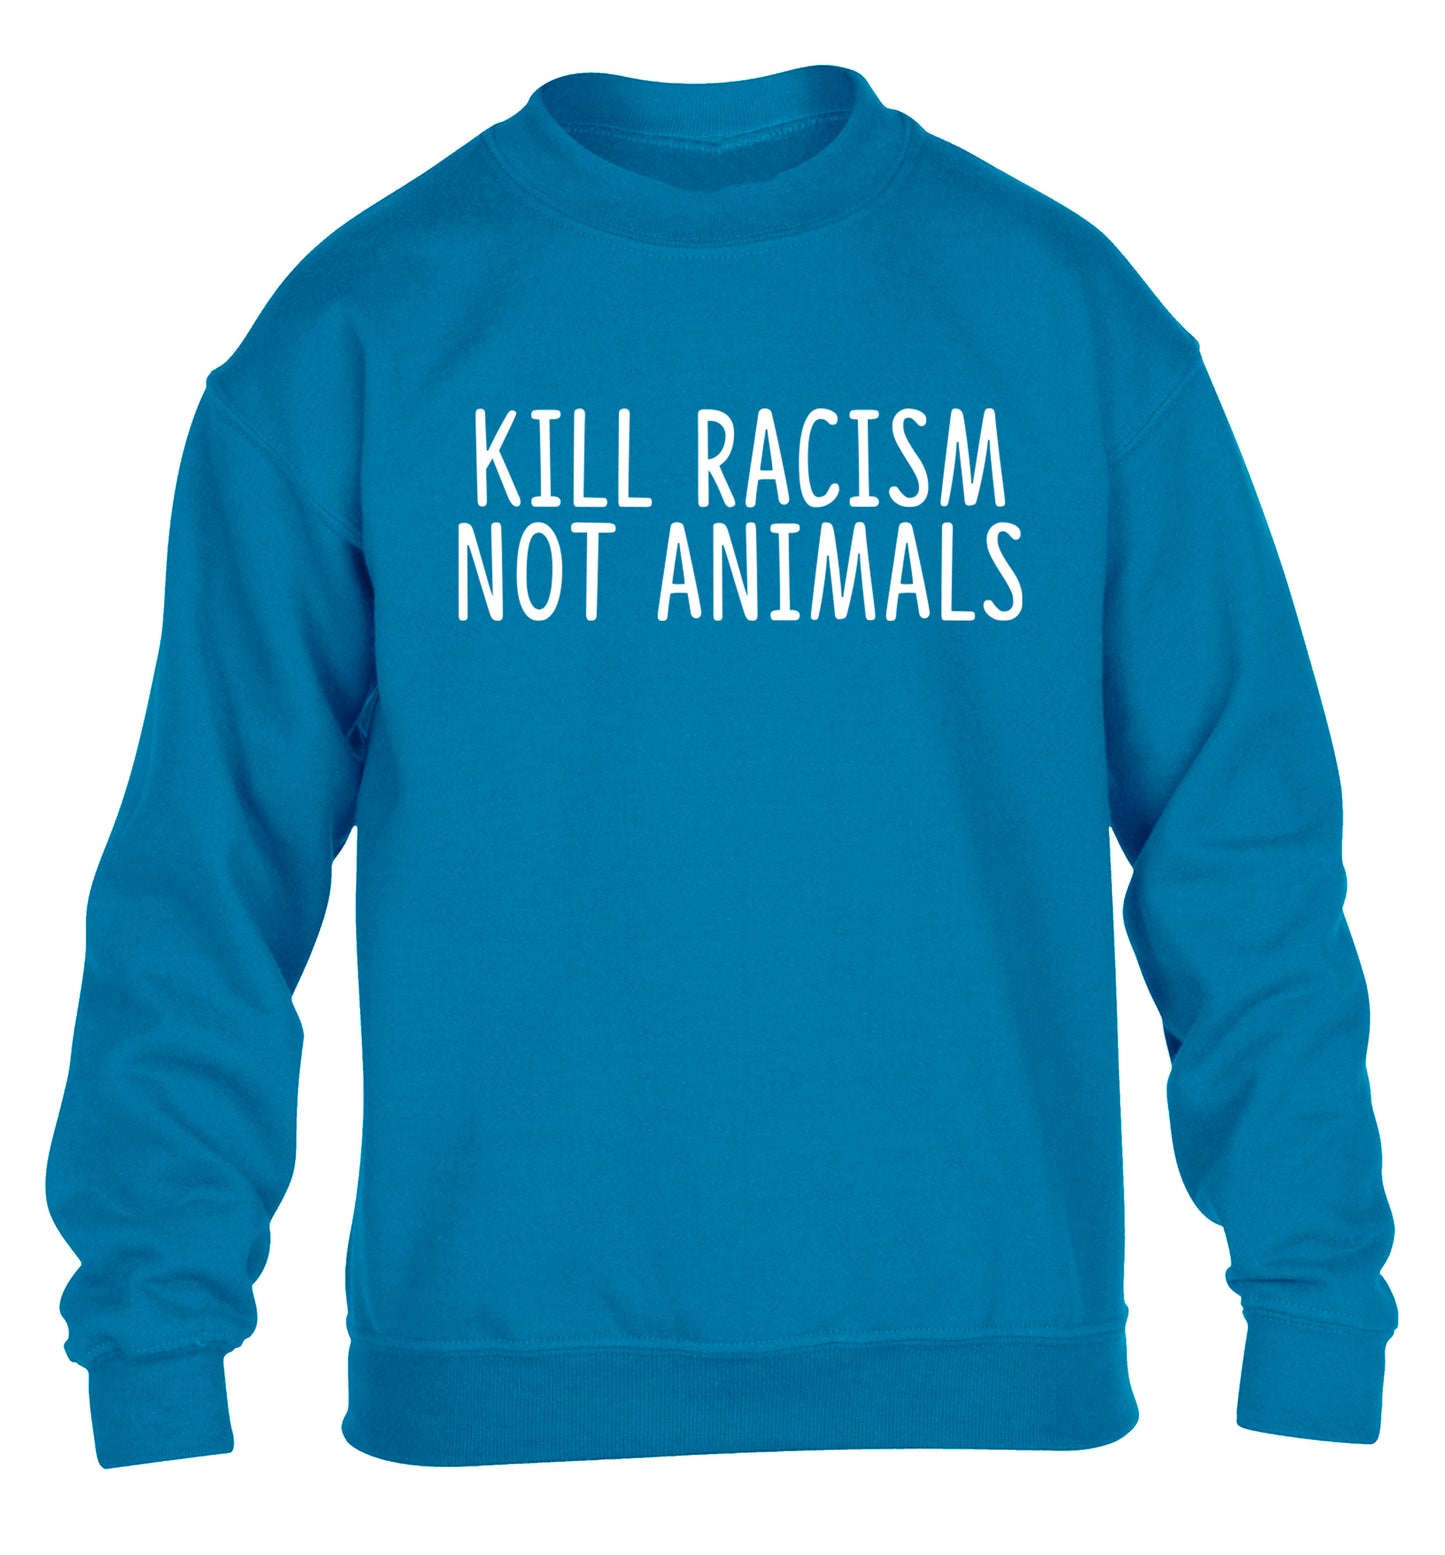 Kill Racism Not Animals children's blue sweater 12-13 Years